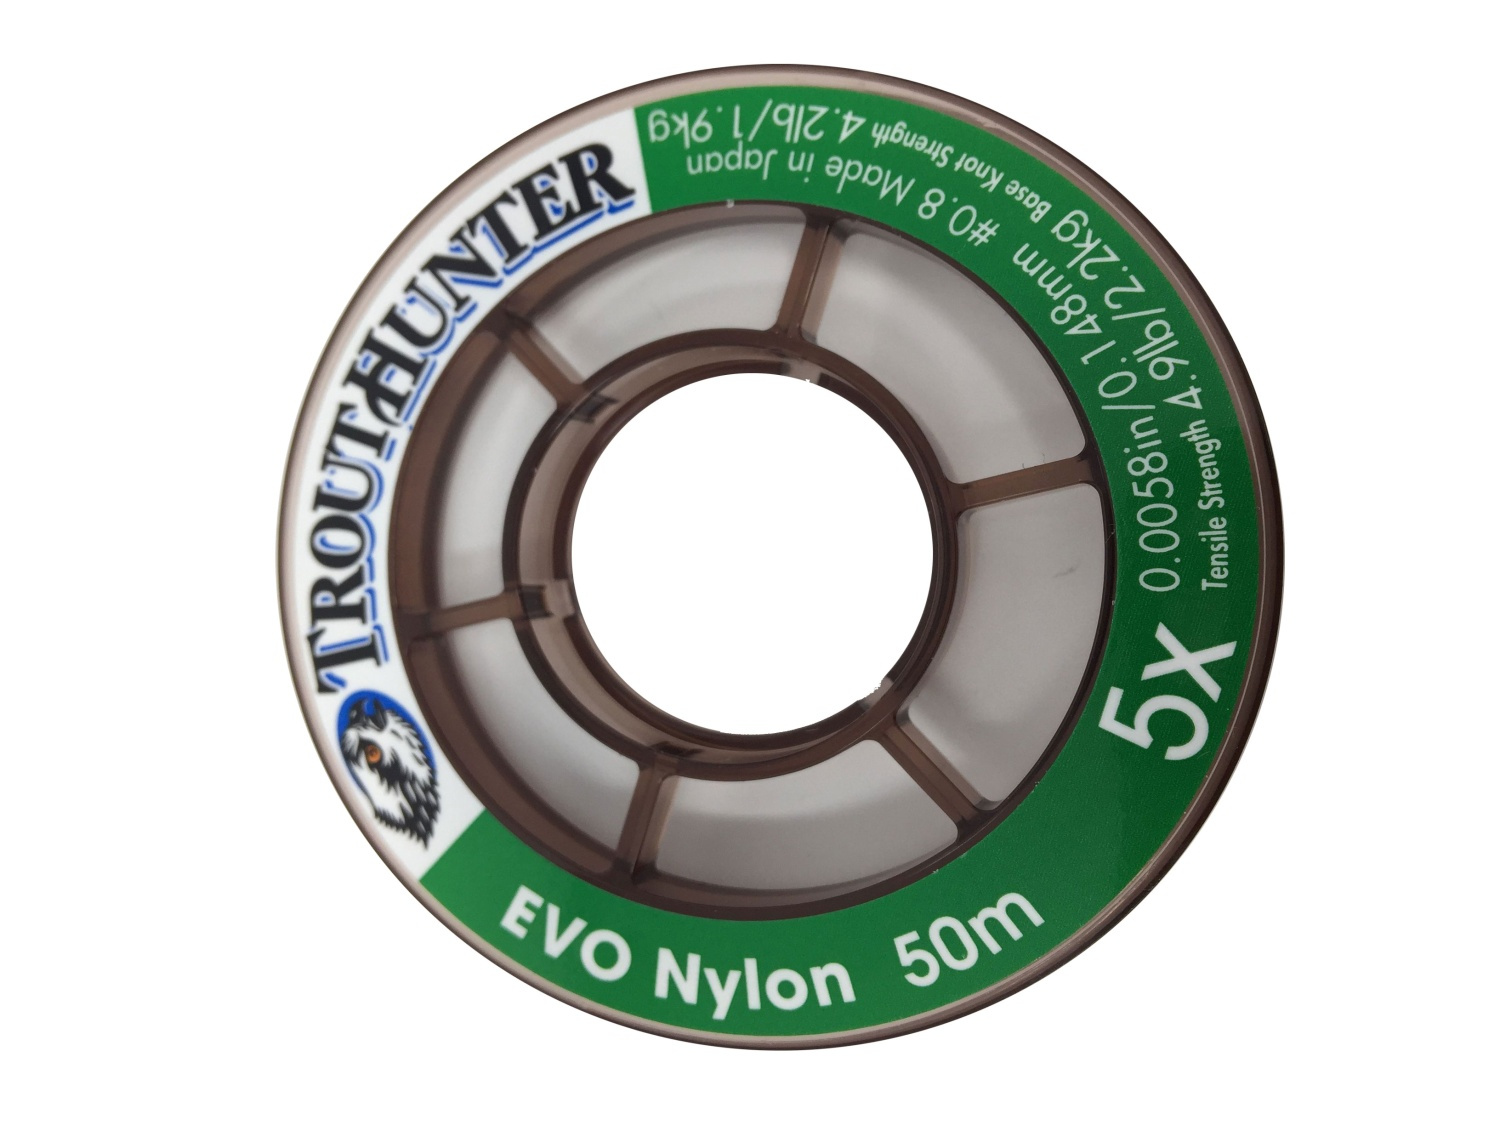 Trout Hunter Nylon EVO Tafsmaterial - 6.5X - 0,117 mm